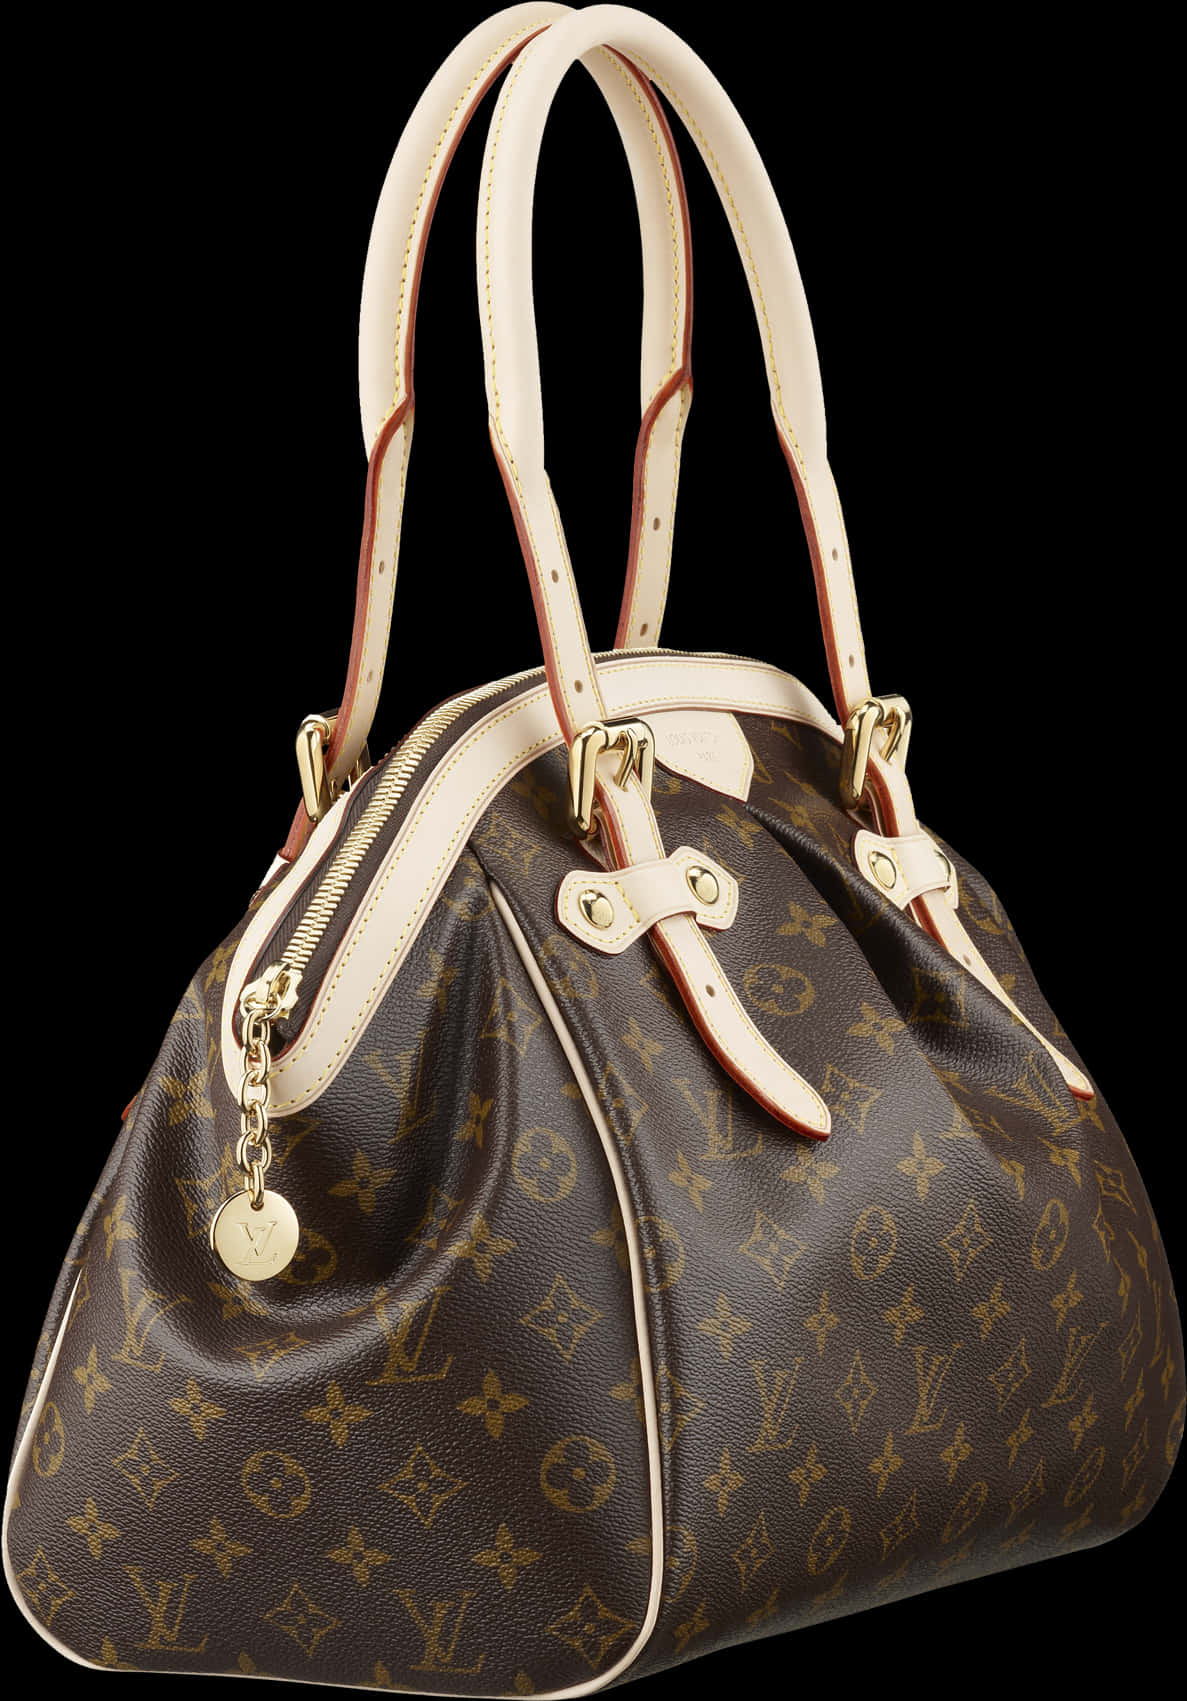 A Brown And White Louis Vuitton Handbag